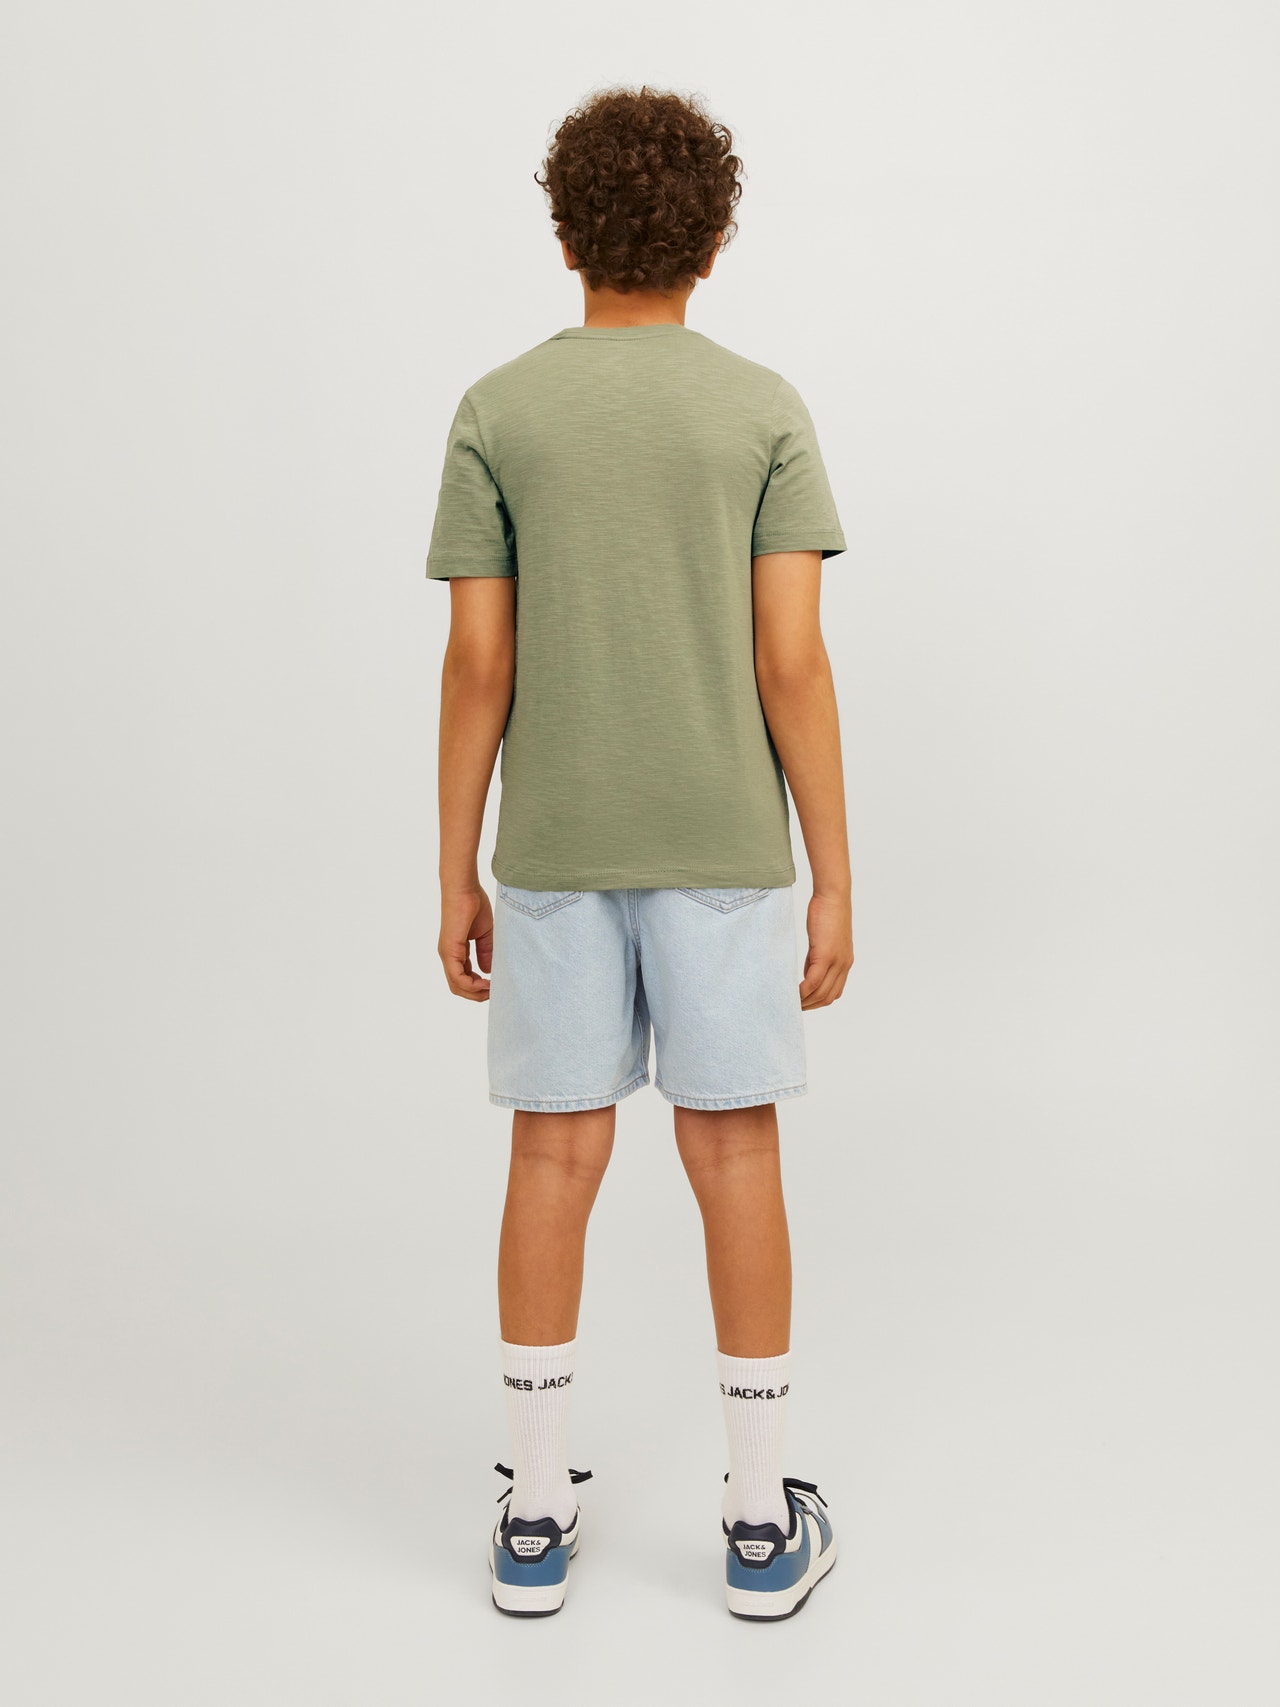 Jack & Jones Camiseta Estampado Para chicos -Oil Green - 12258234